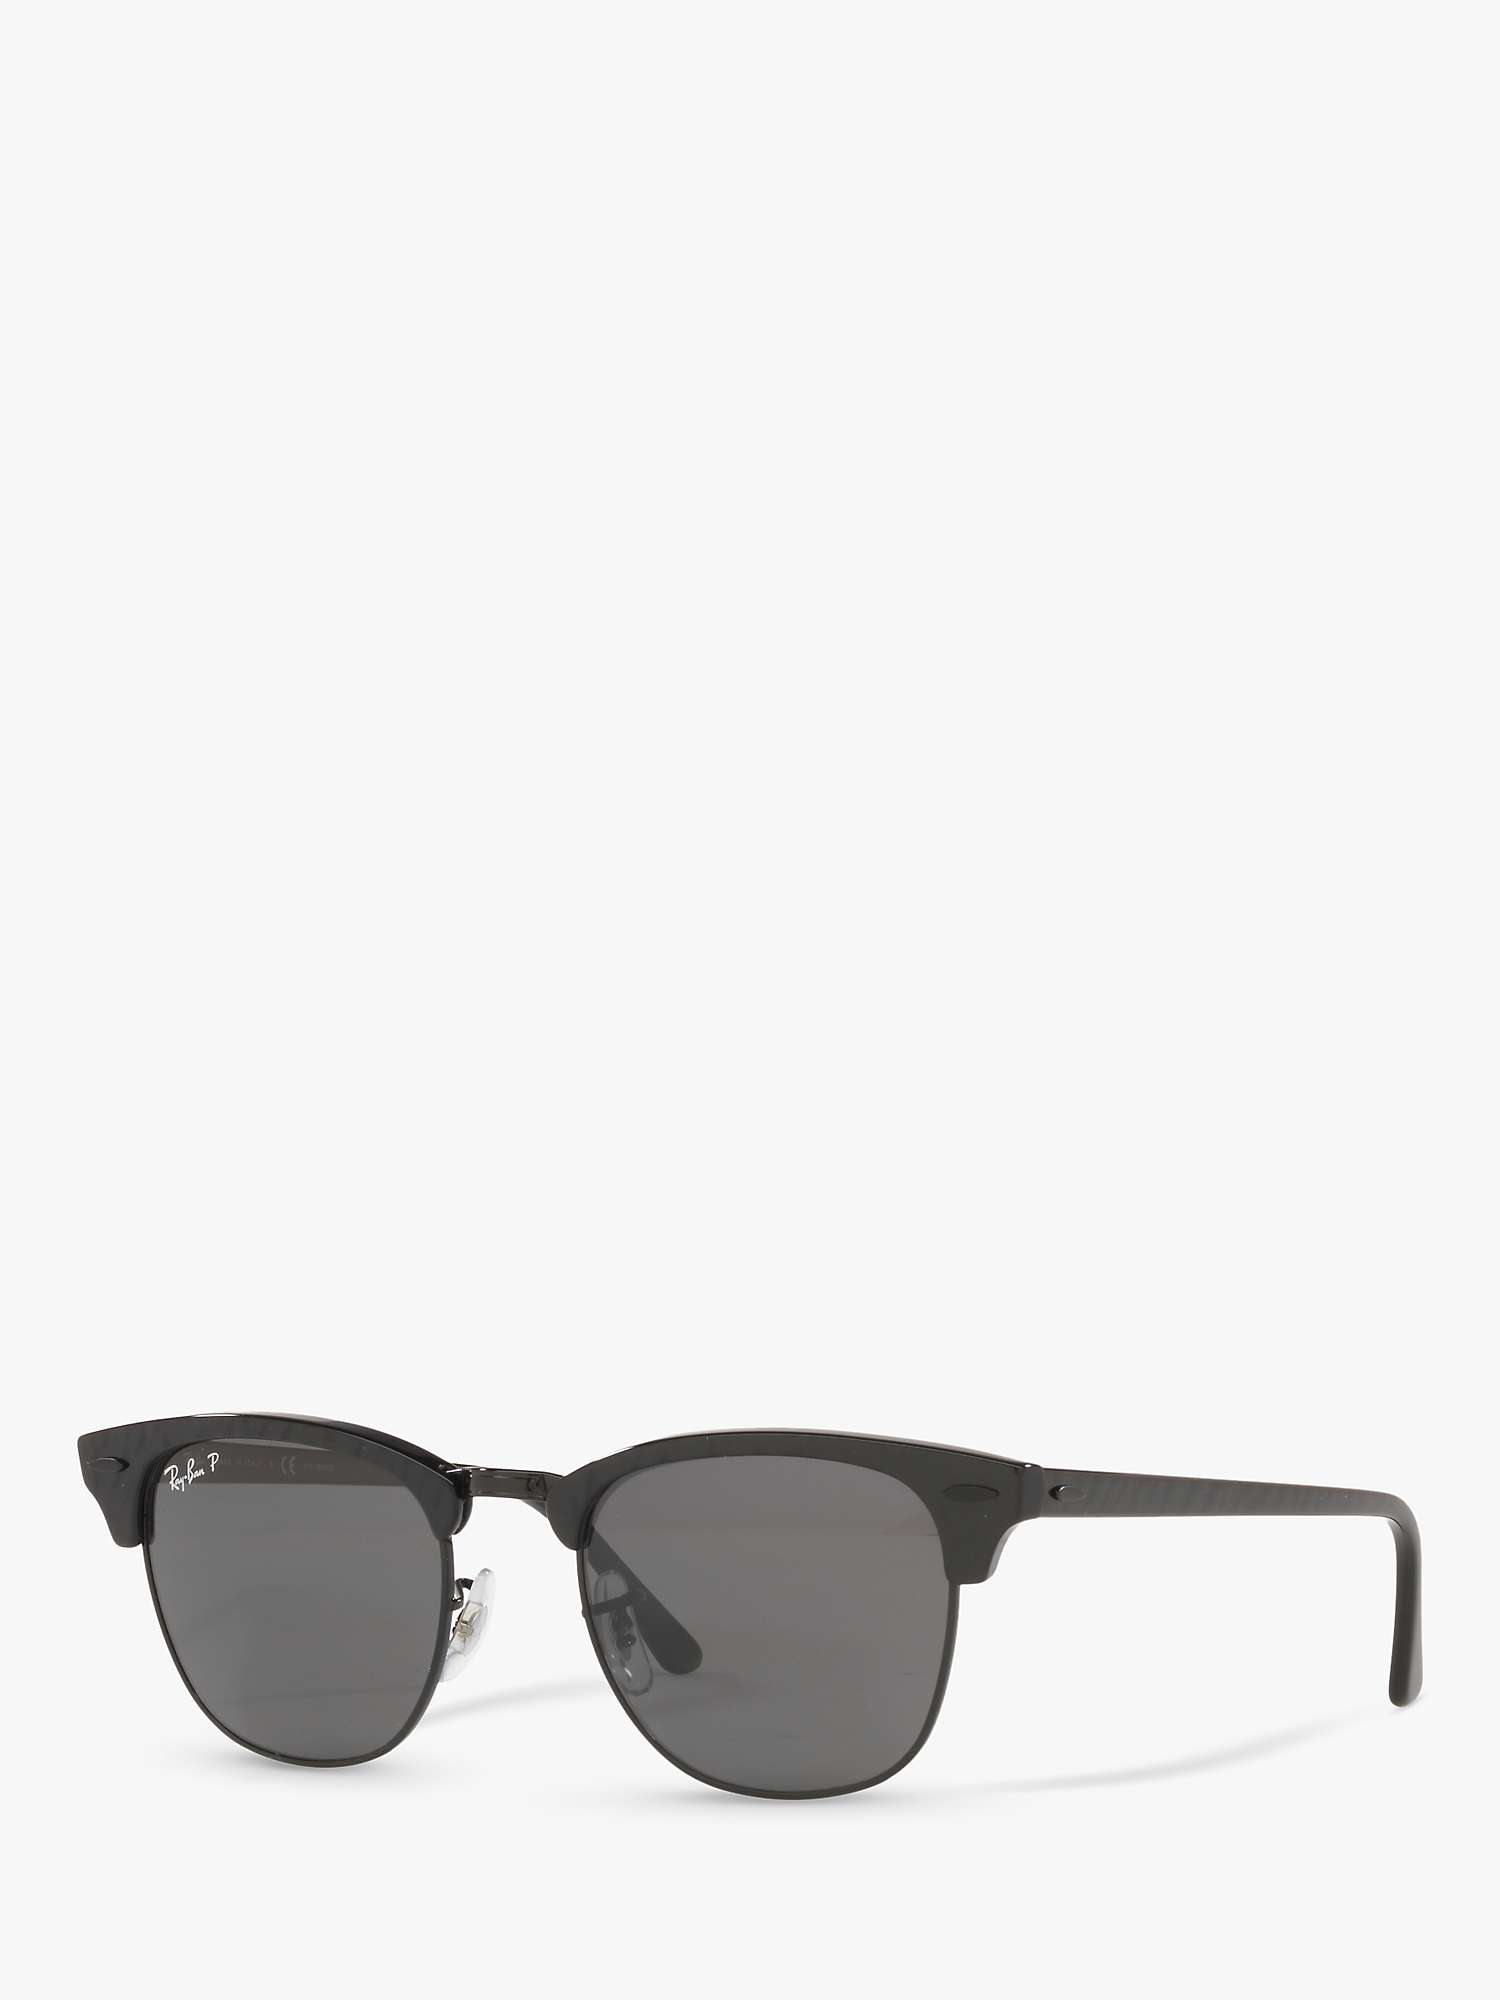 Buy Ray-Ban RB3016 Unisex Polarised Clubmaster Sunglasses, Black/Grey Online at johnlewis.com